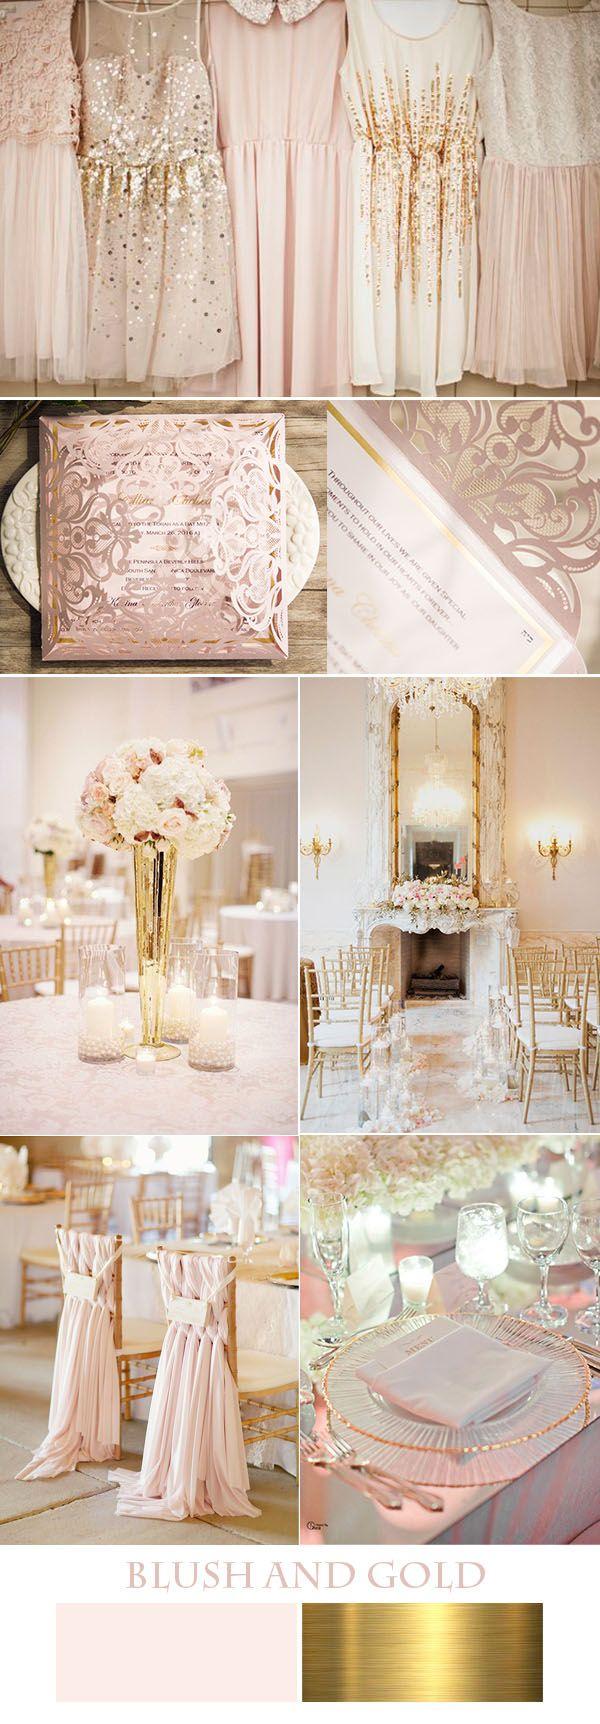 زفاف - Beautiful Foil Invitations With Inspired Wedding Color Ideas